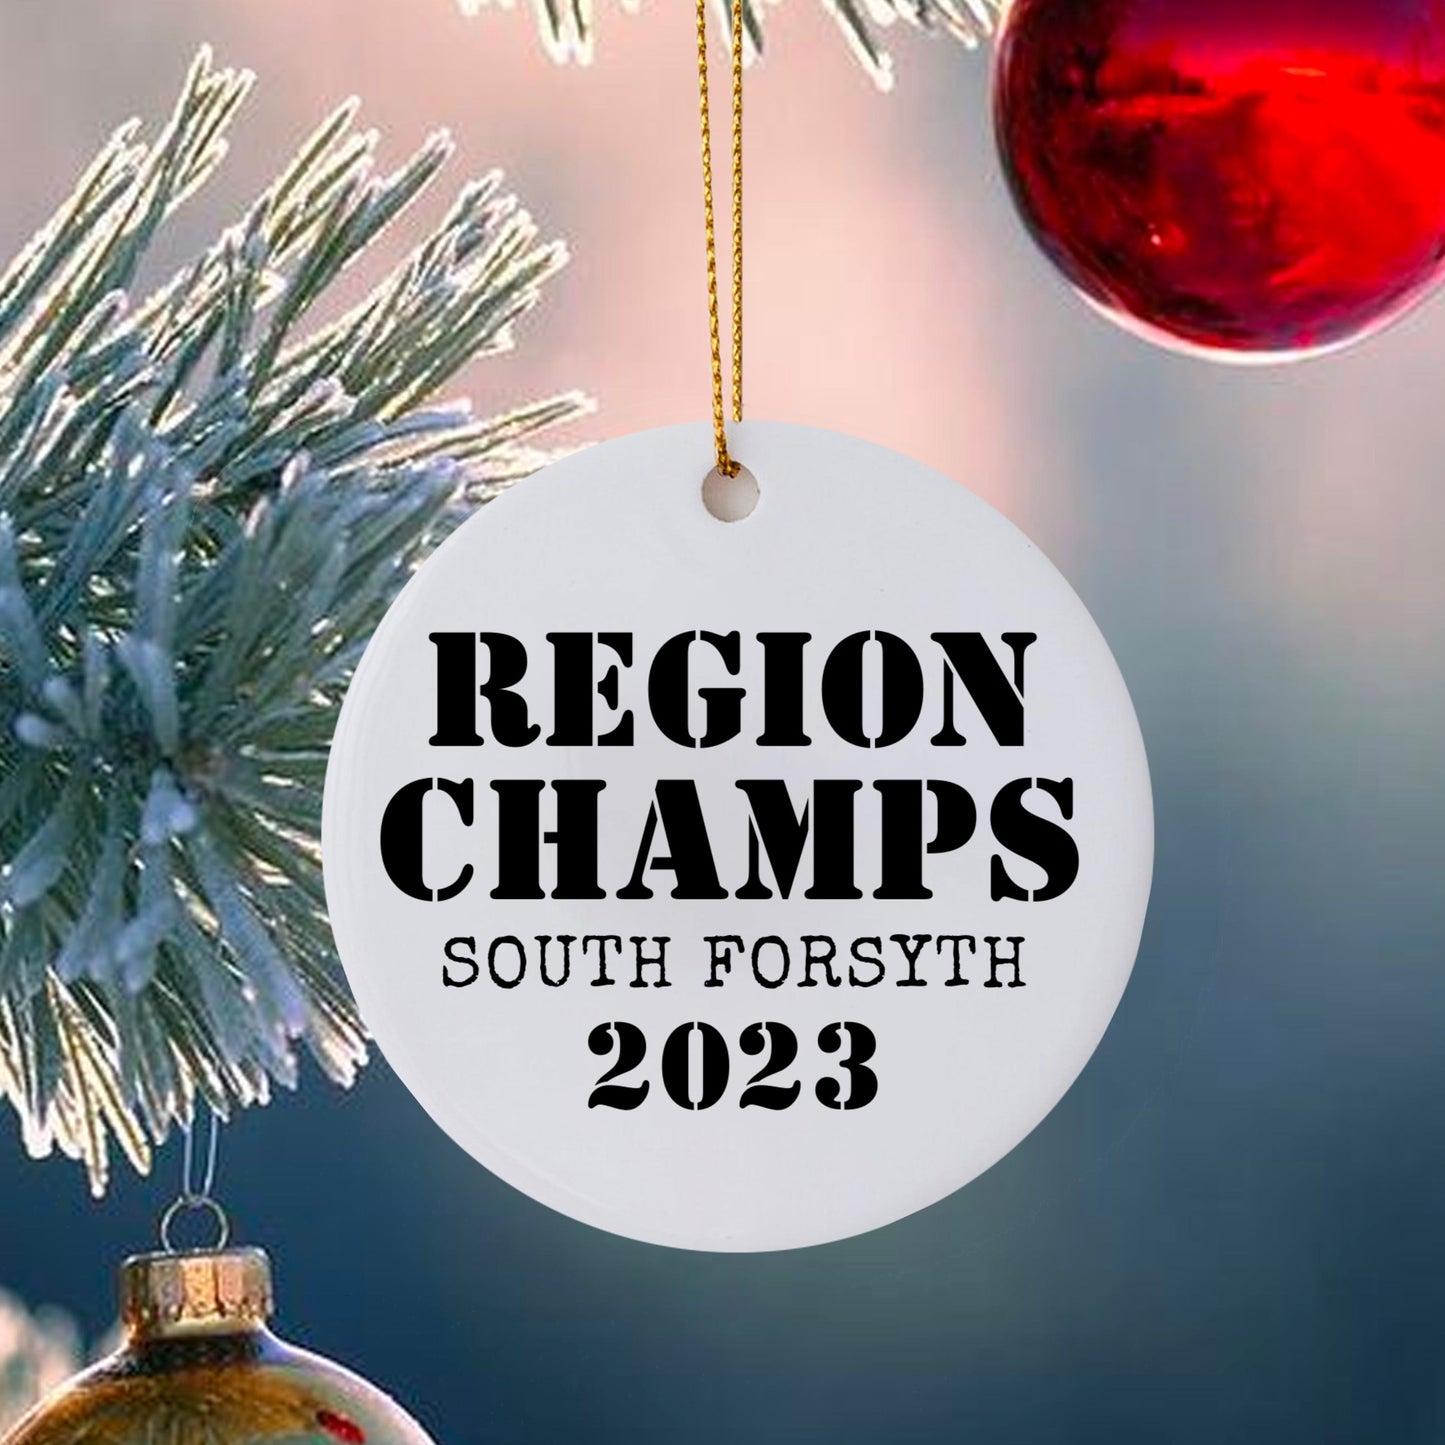 Region/District Champs Ornament